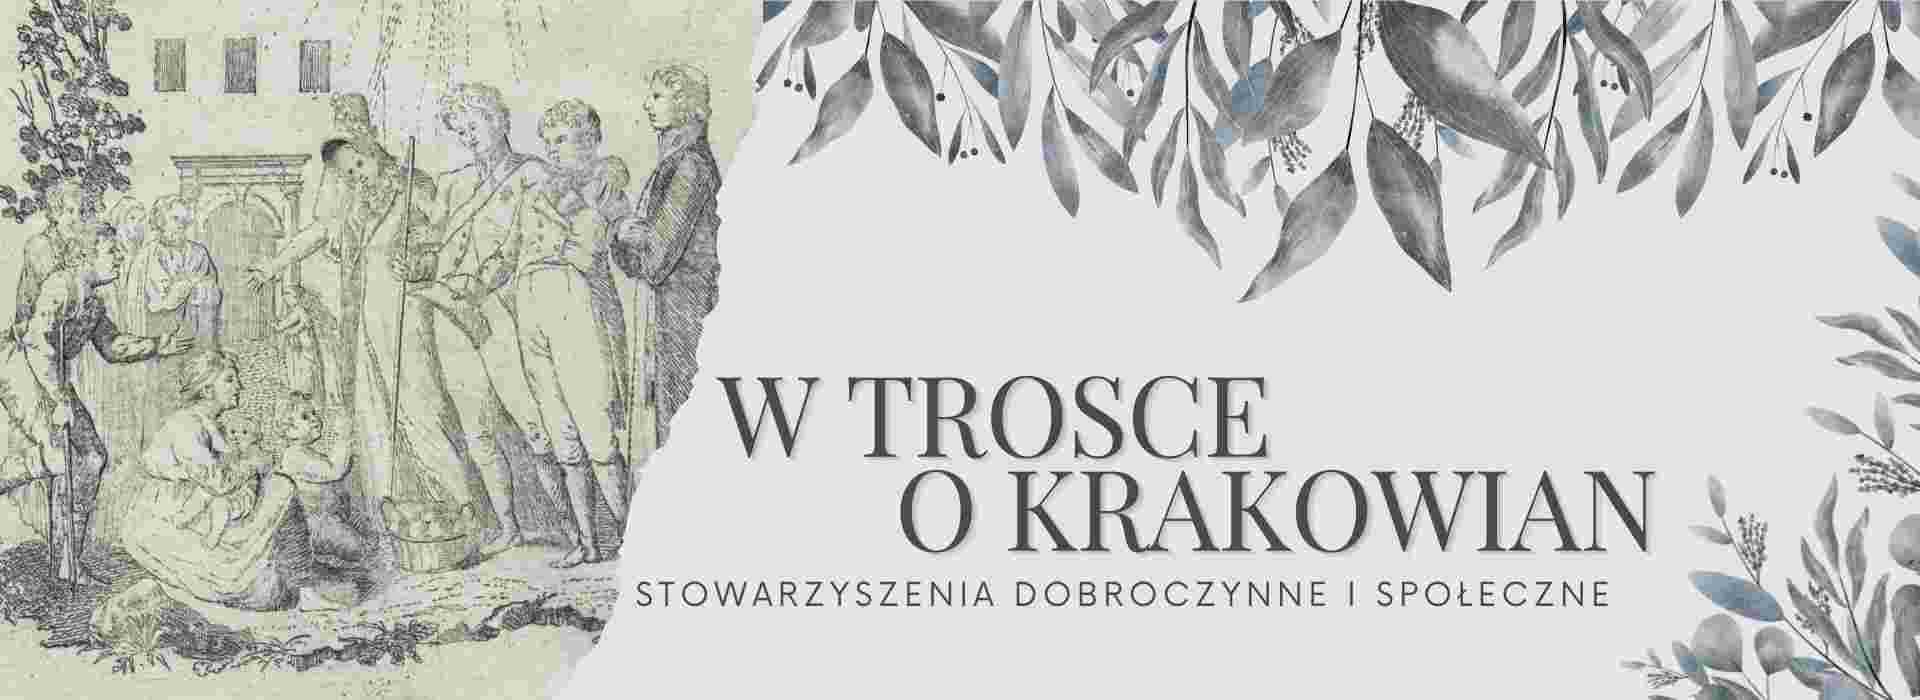 W trosce o Krakowian